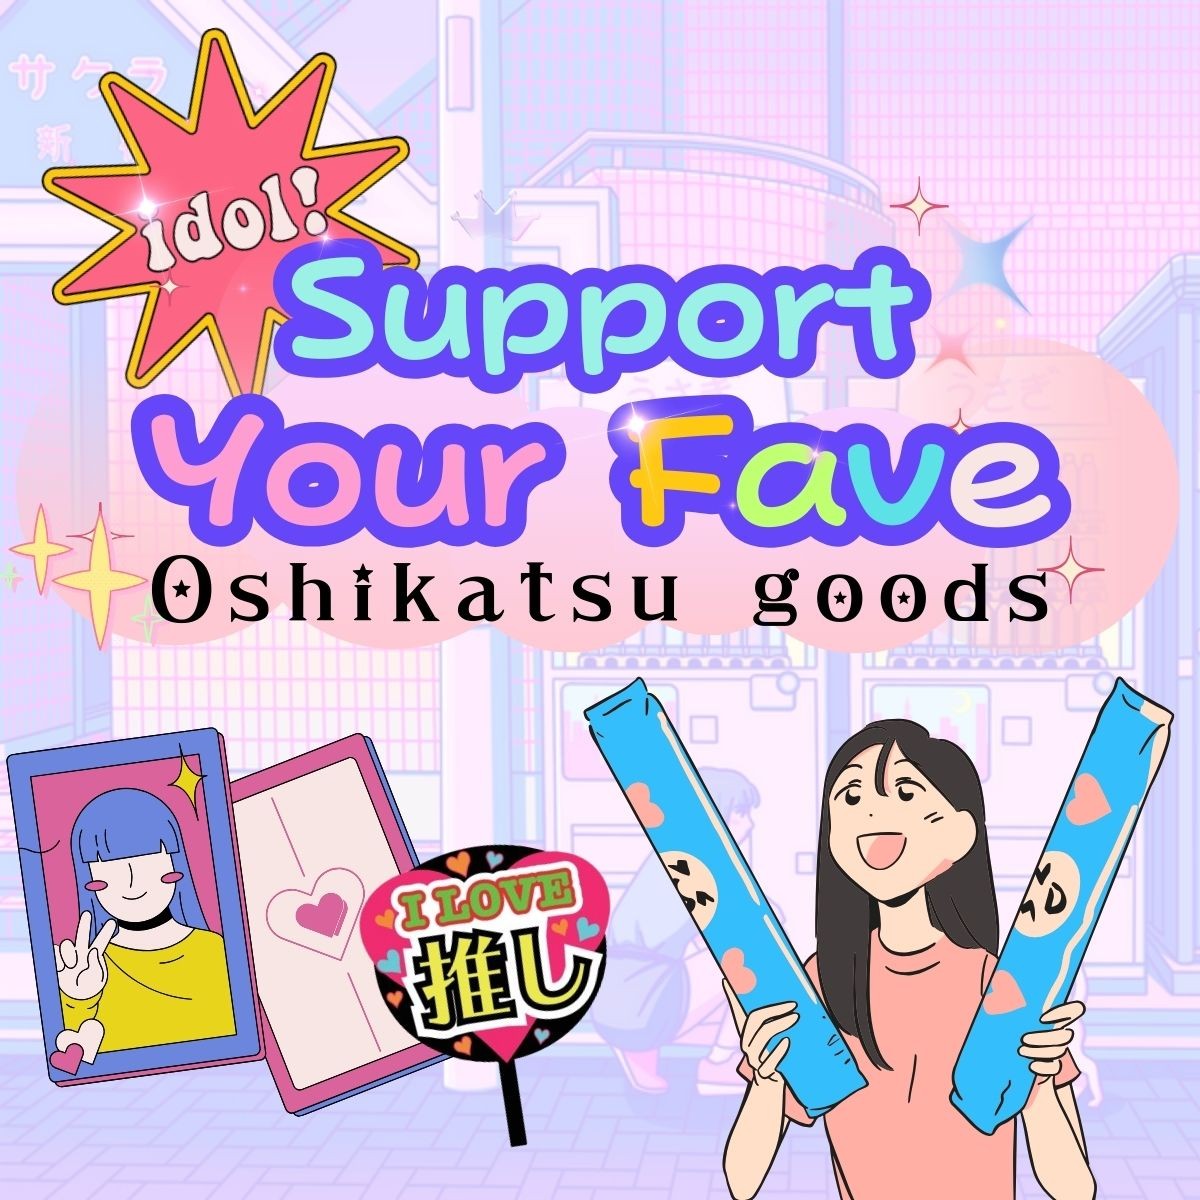 Oshikatsu goods